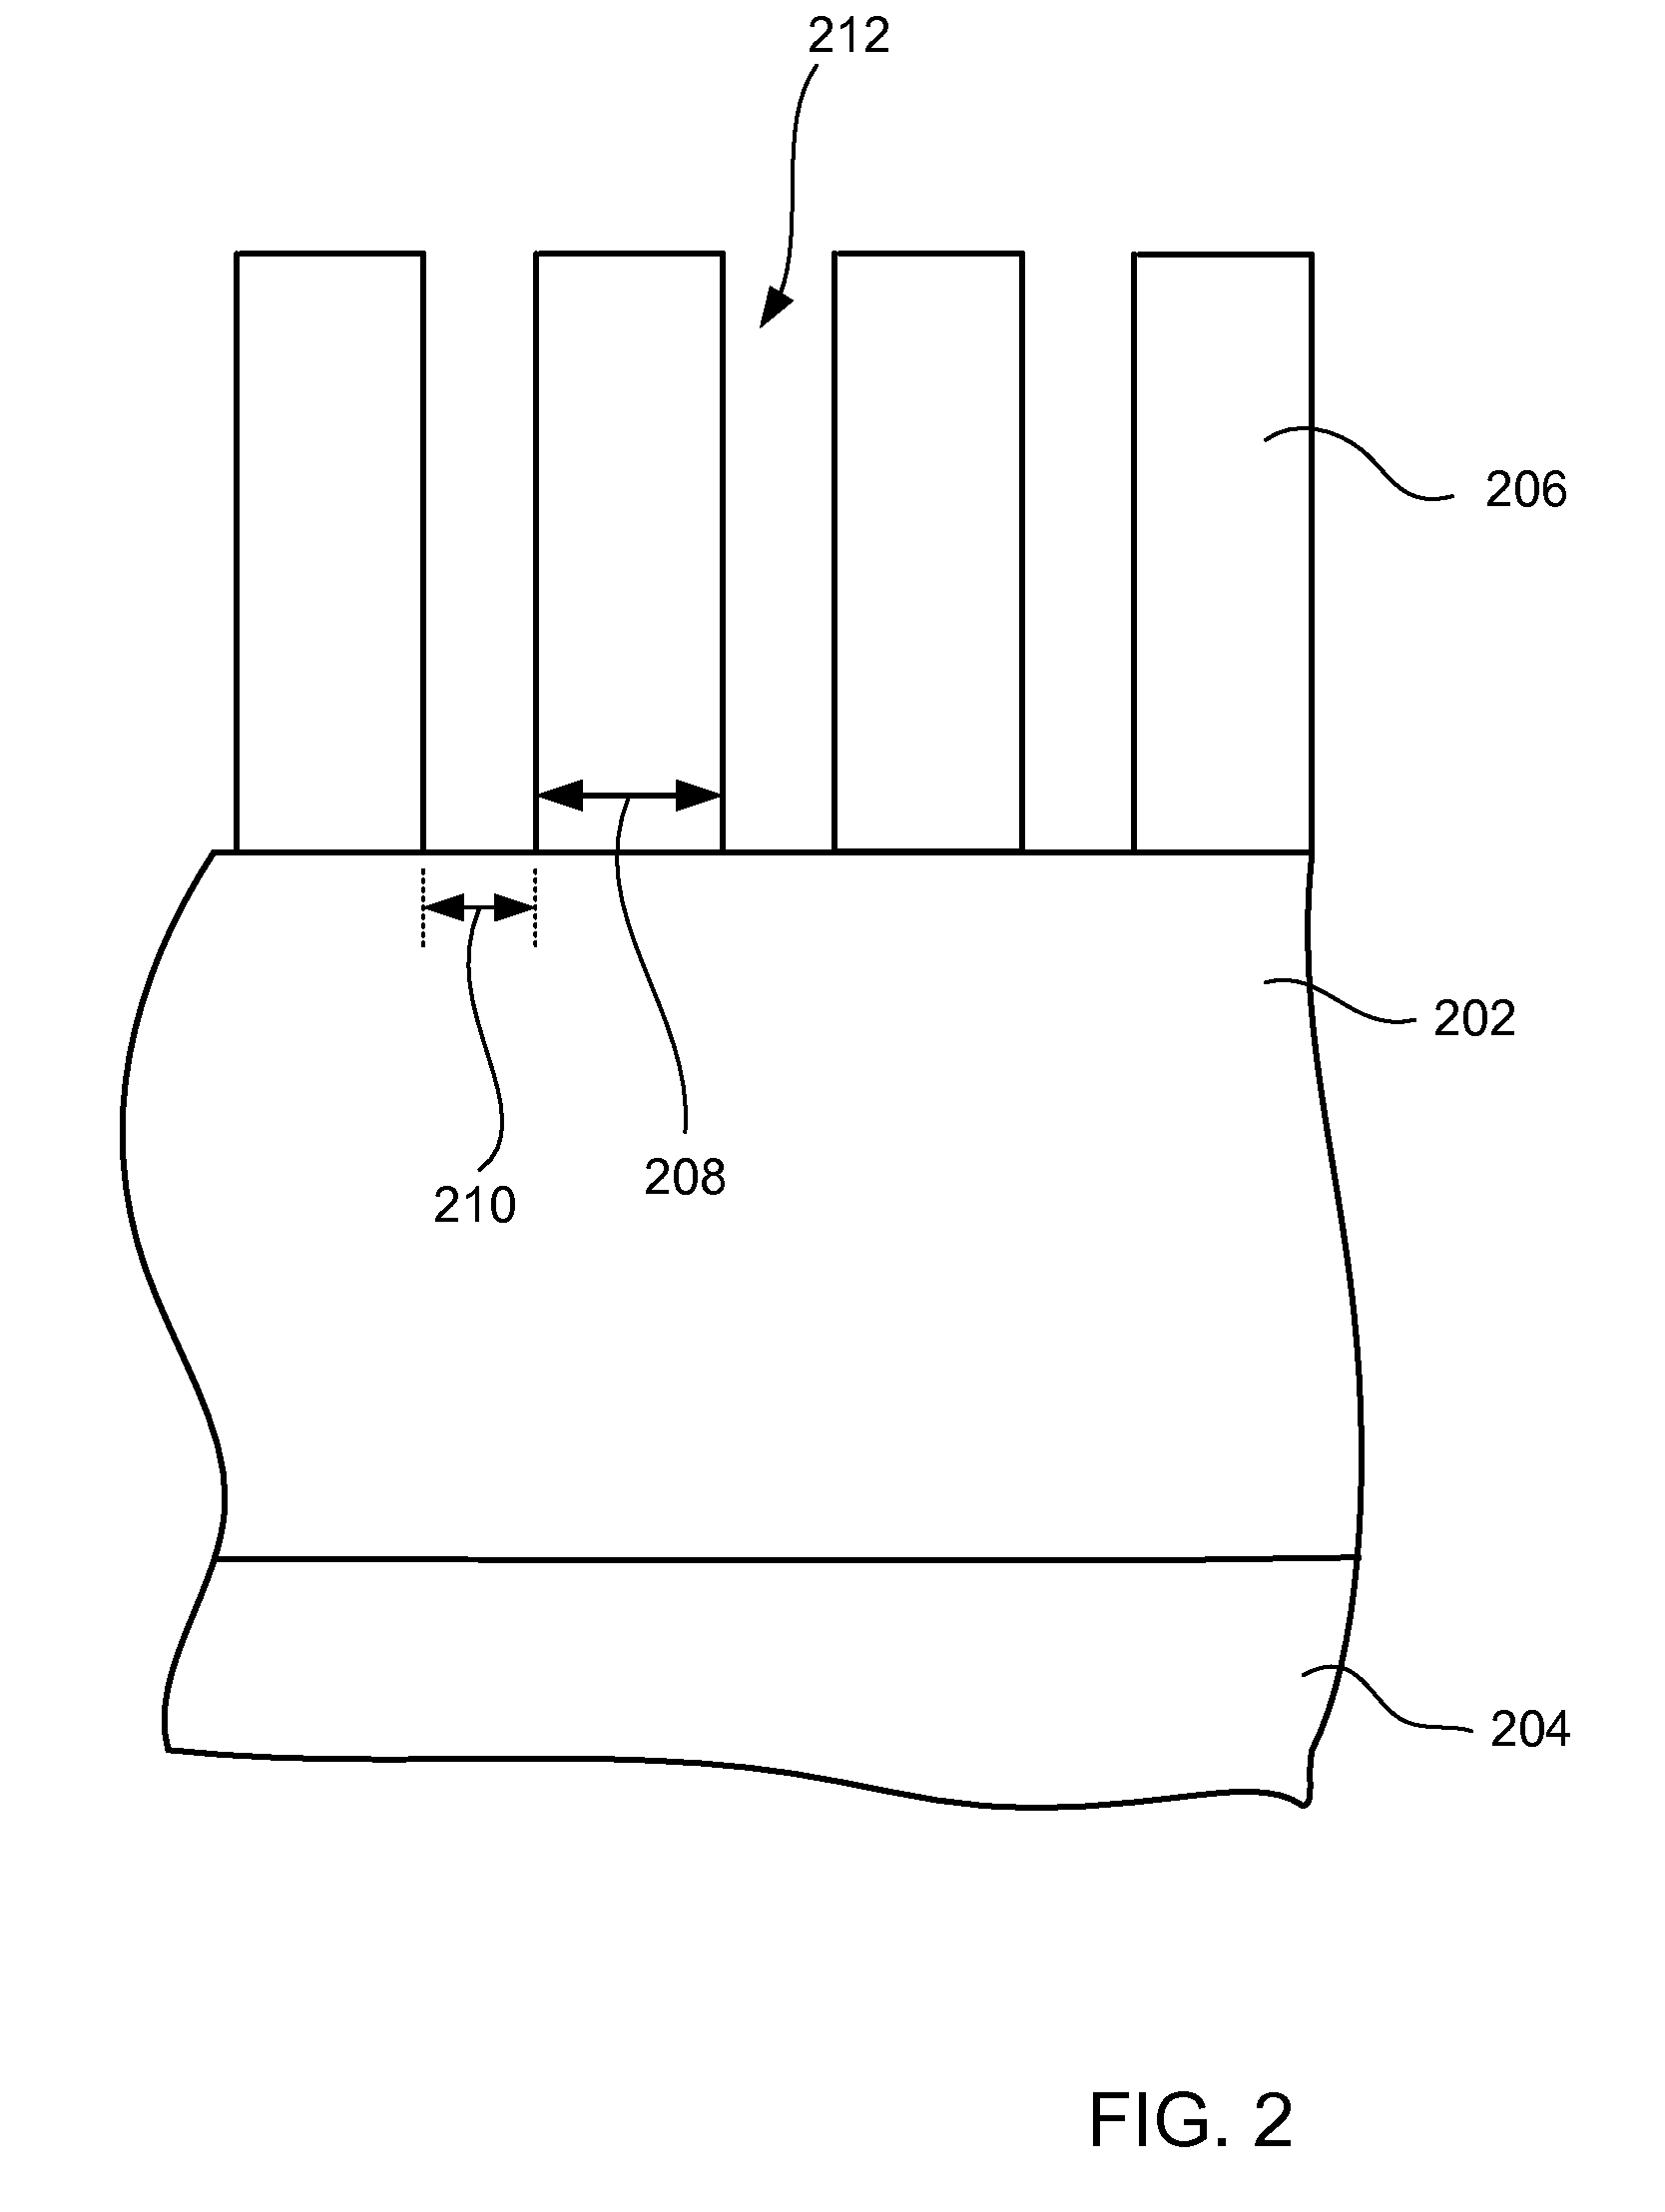 Profile control in dielectric etch